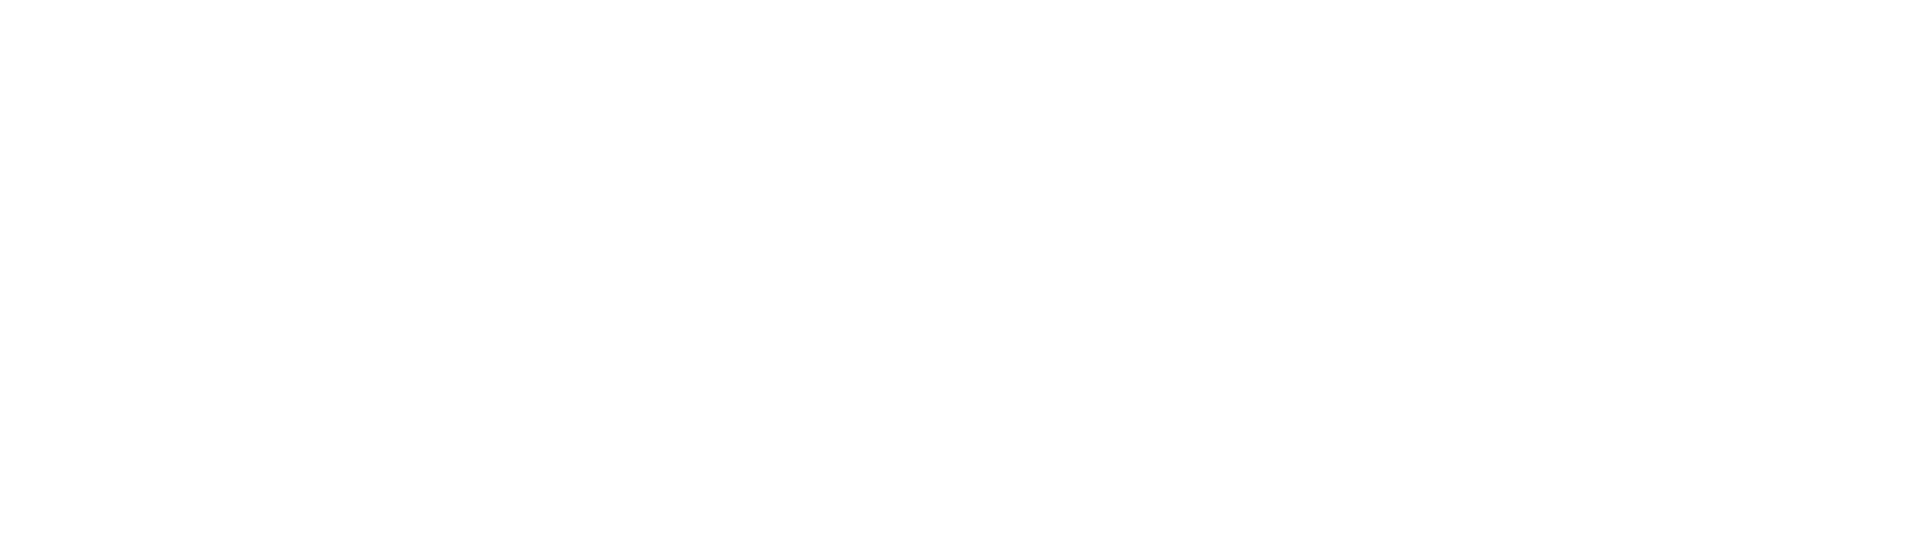 ReiStil_Logo_1zeilig_Claim_weiß2